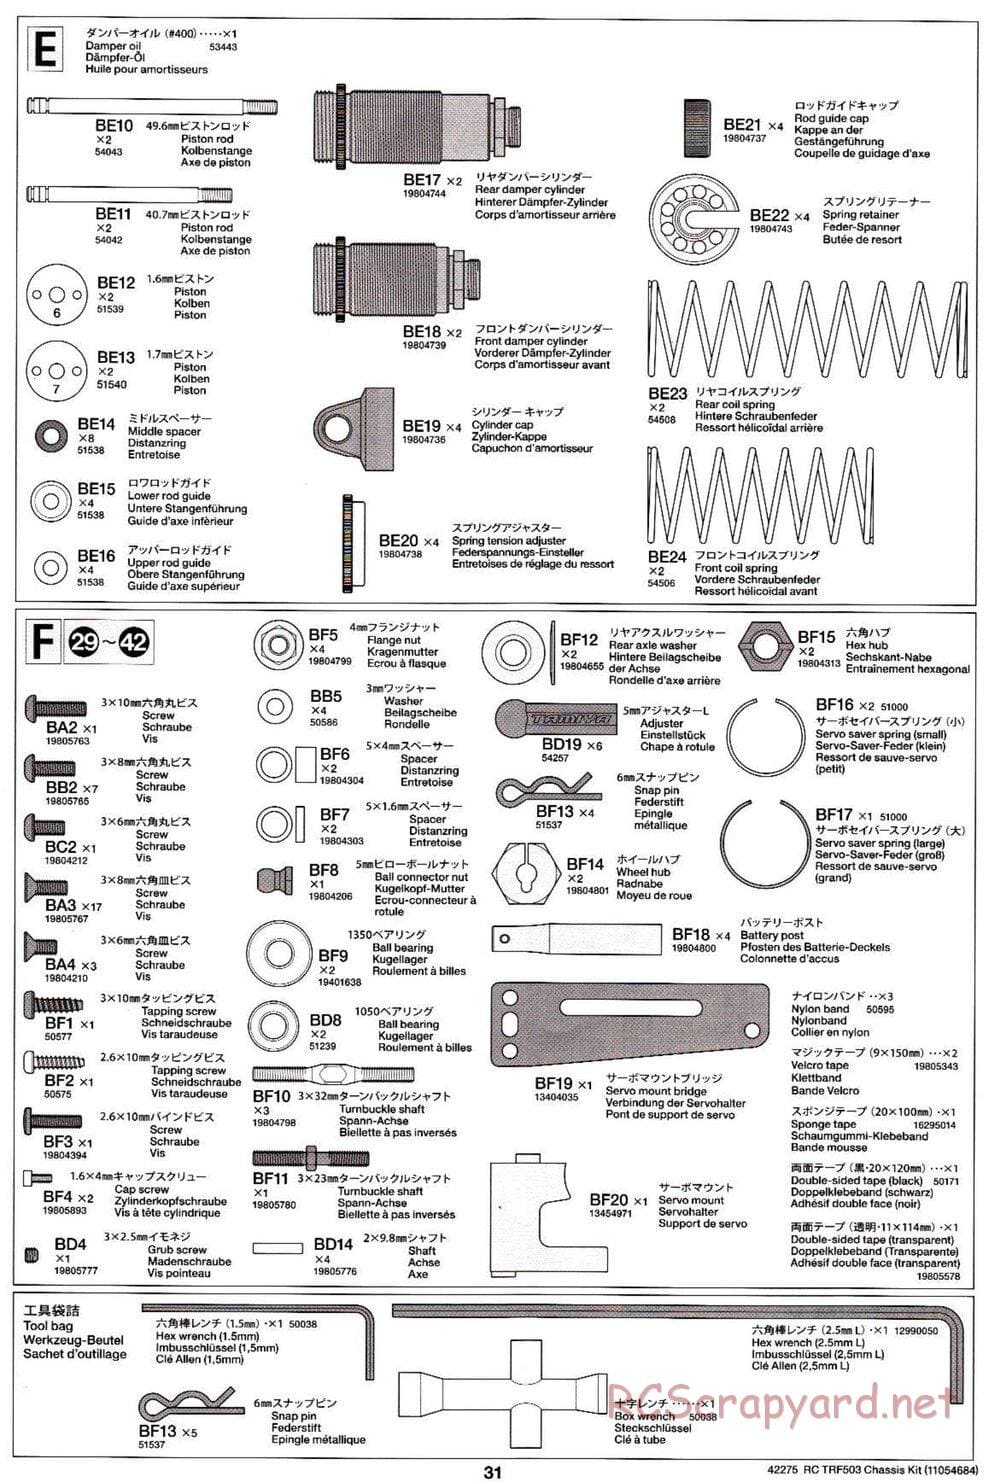 Tamiya - TRF503 Chassis - Manual - Page 31